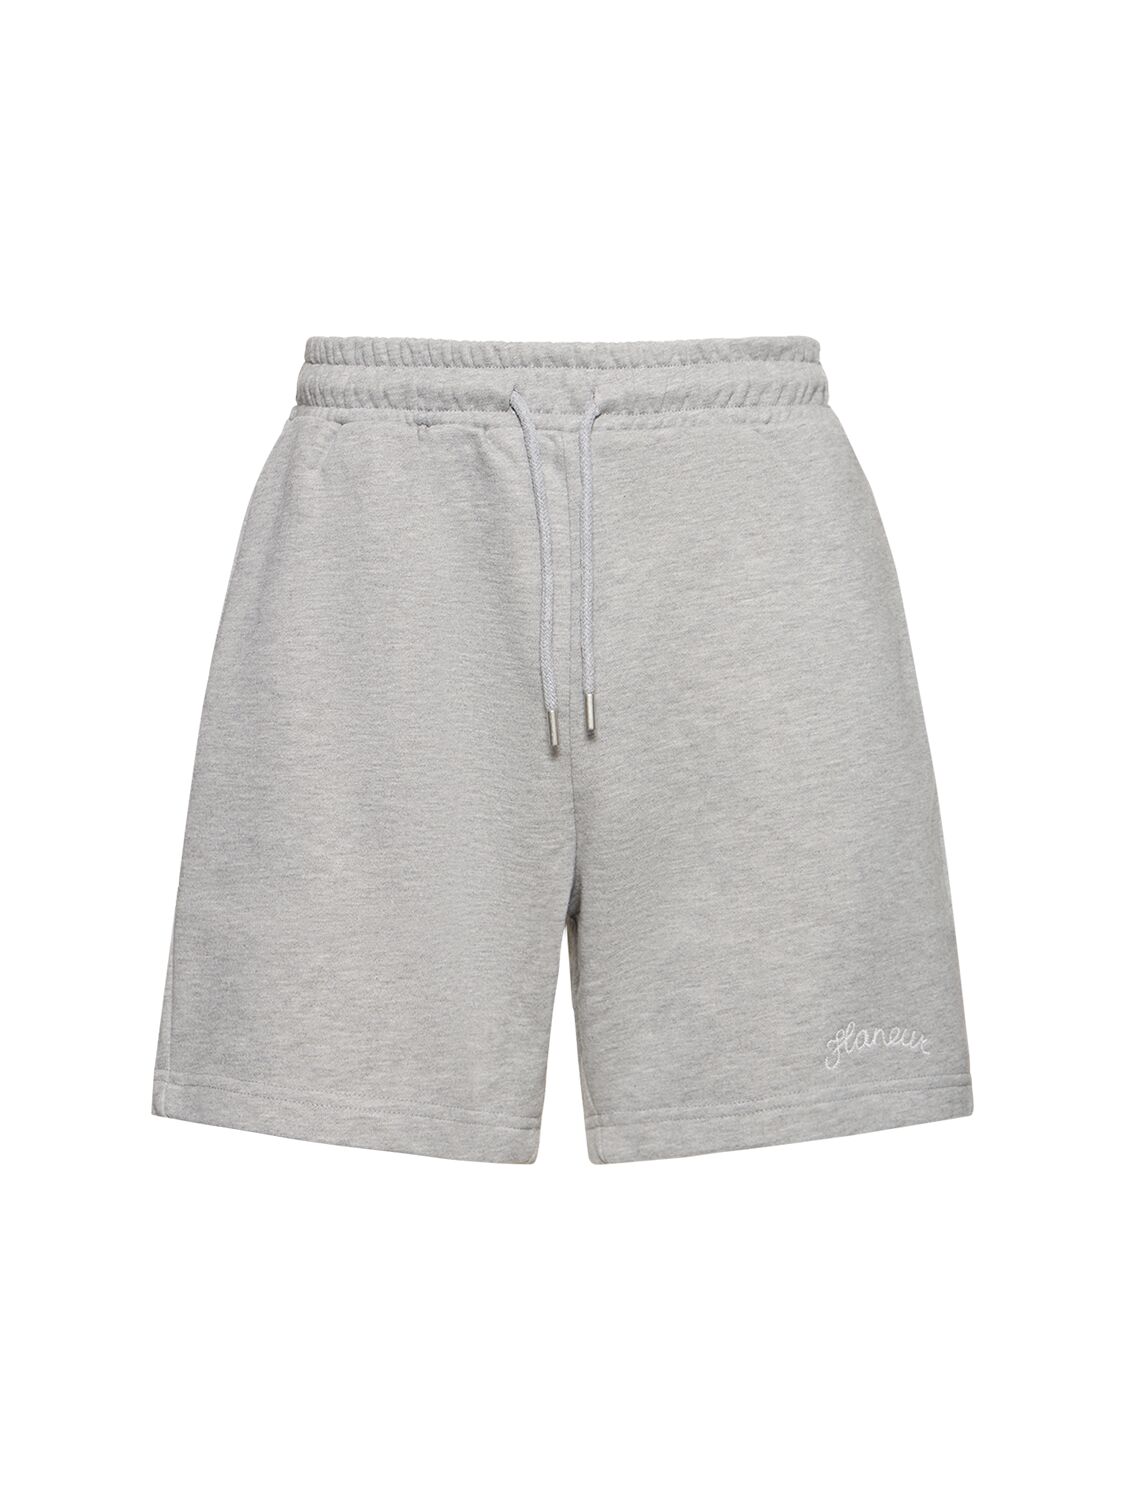 Flâneur Signature Cotton Shorts In Grey